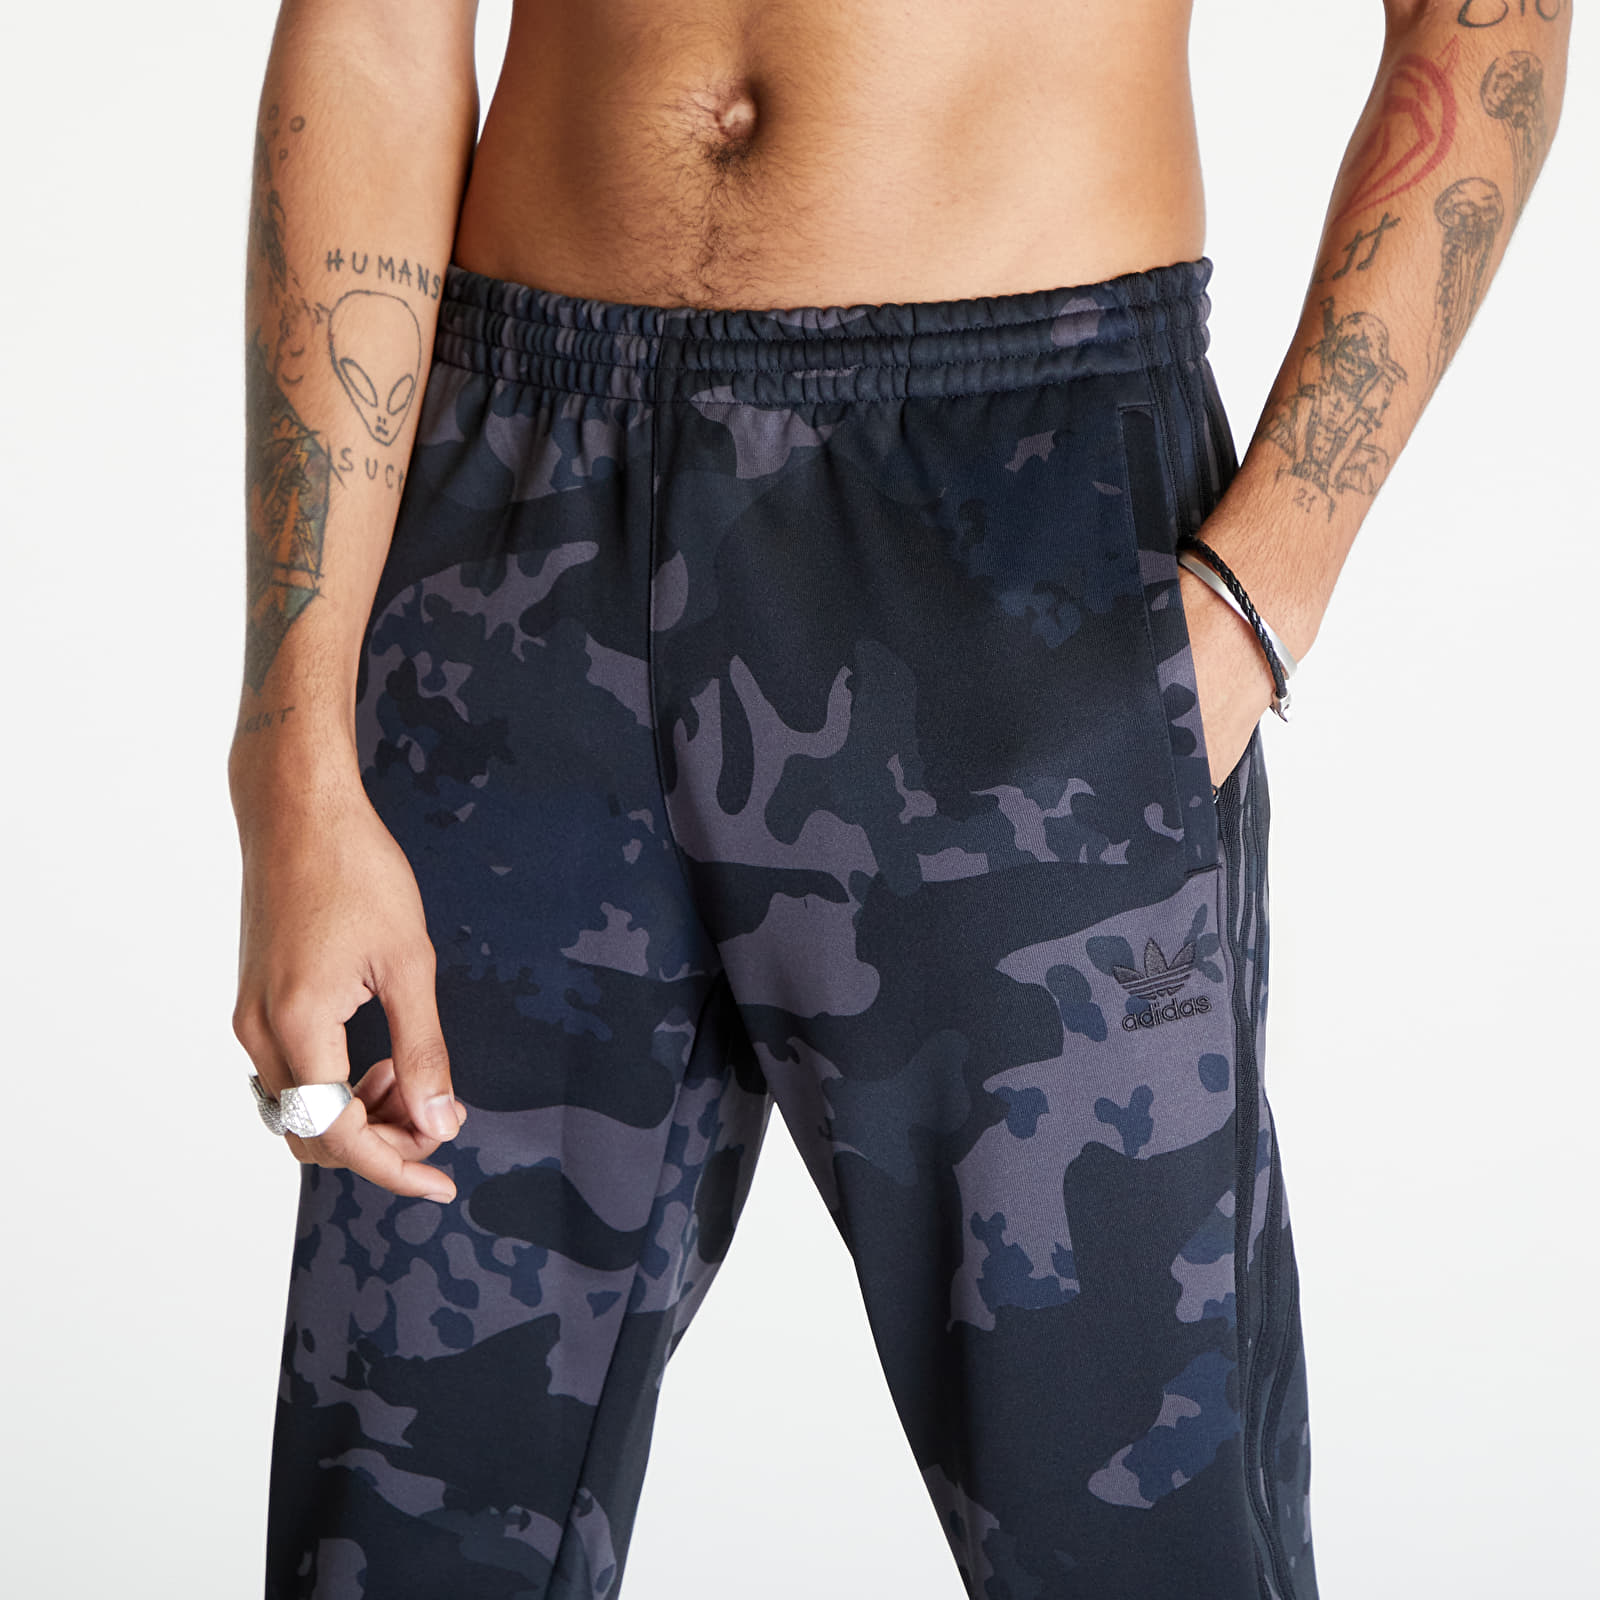 Adidas Tiro Camouflage Camo Women's Pants Sweatpants 3-Stripes Bottoms Size  M | eBay